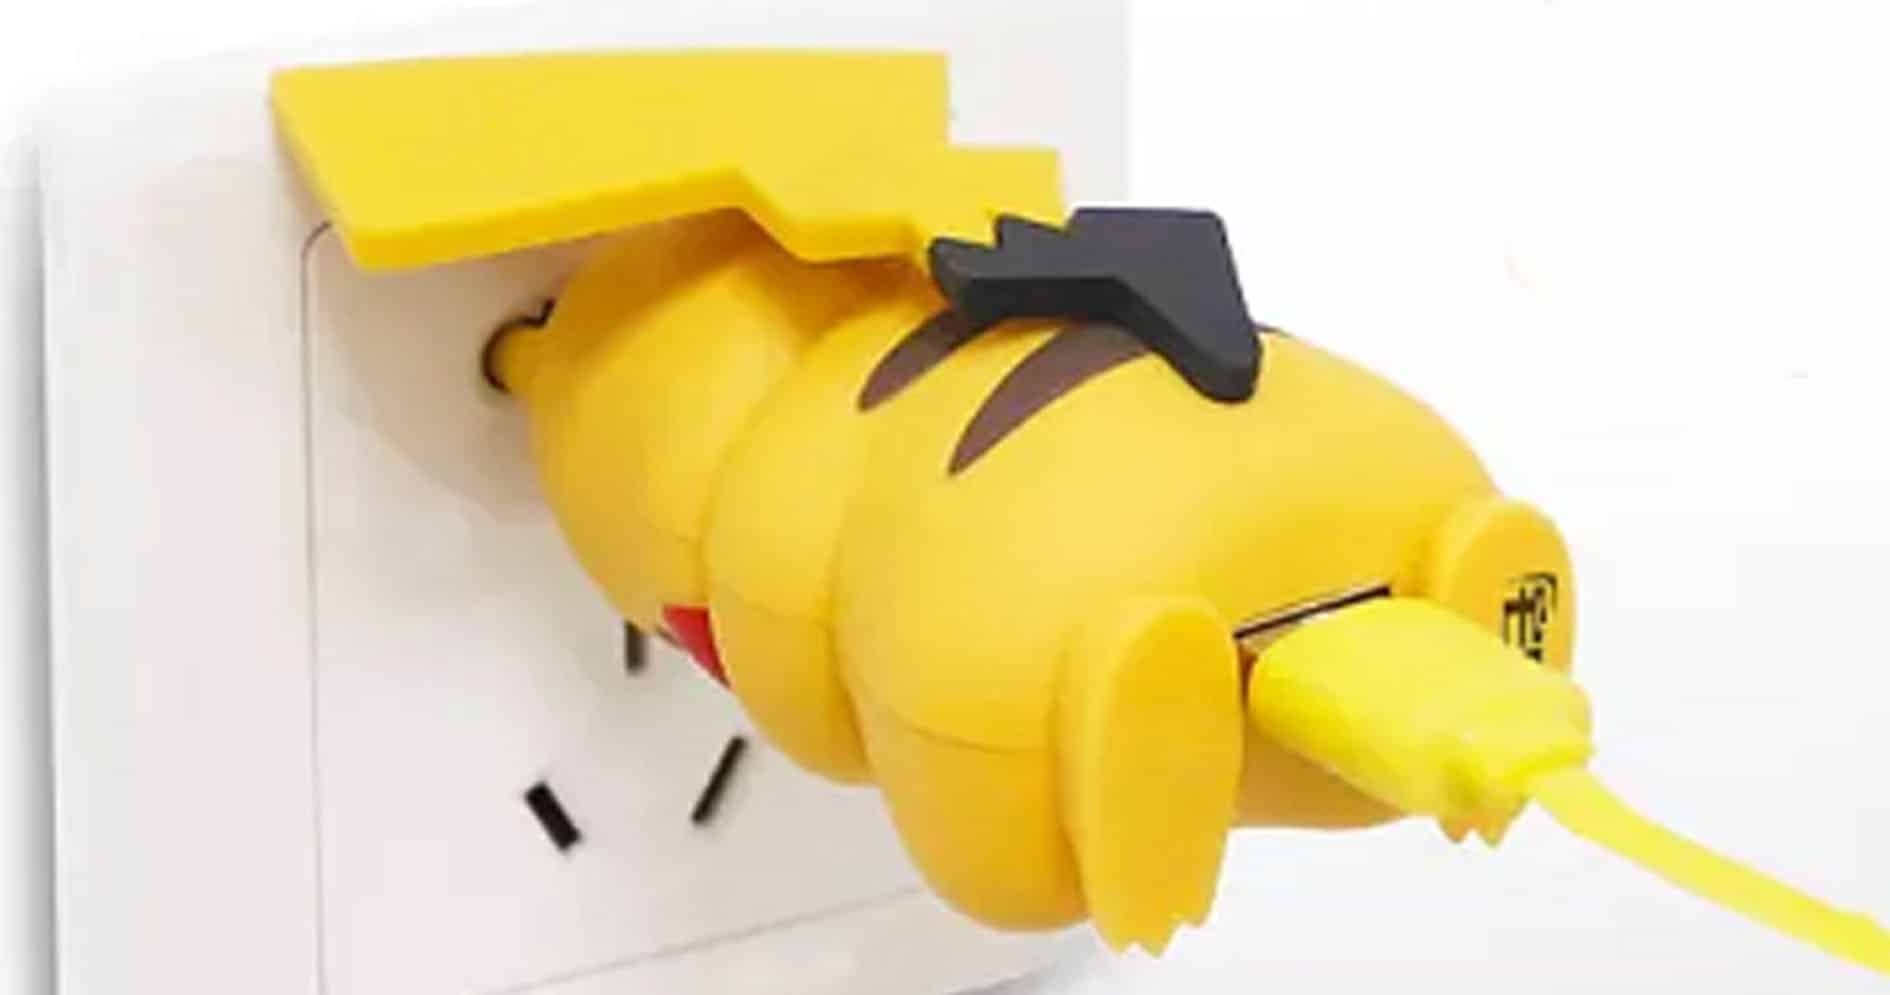 Pikachu Butt Plug Phone Charger